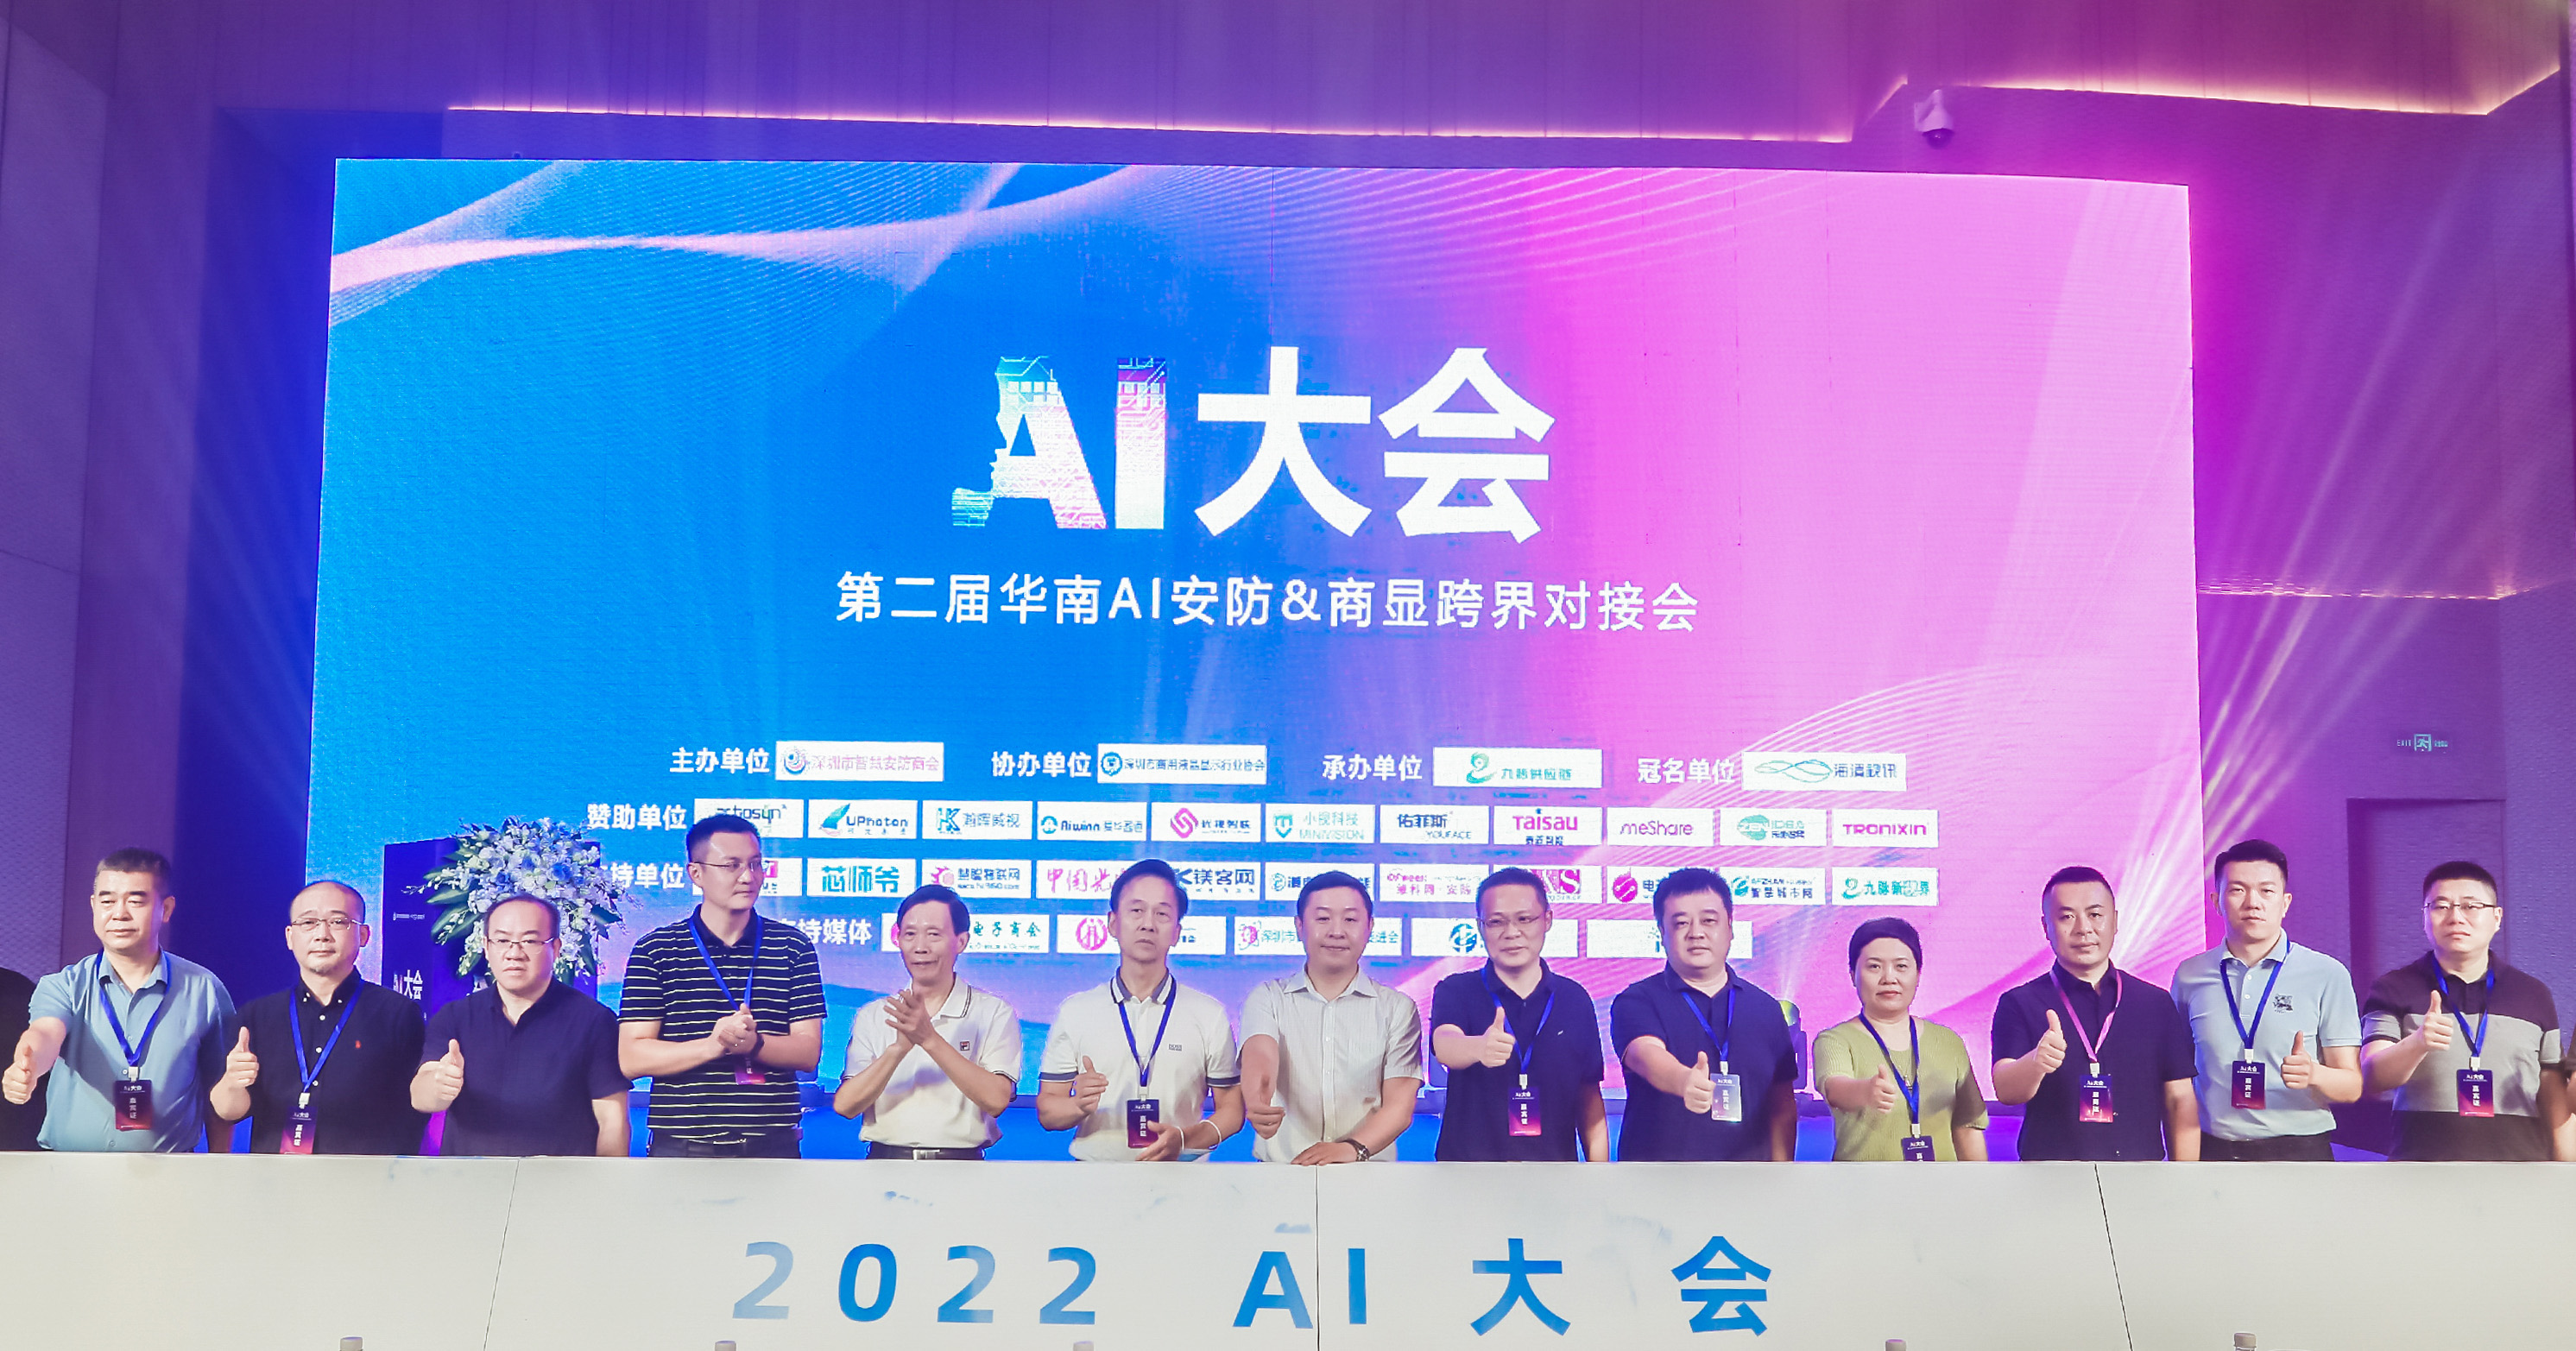 2022 AI大会在深启幕，小视科技与行业名企共话智慧安防